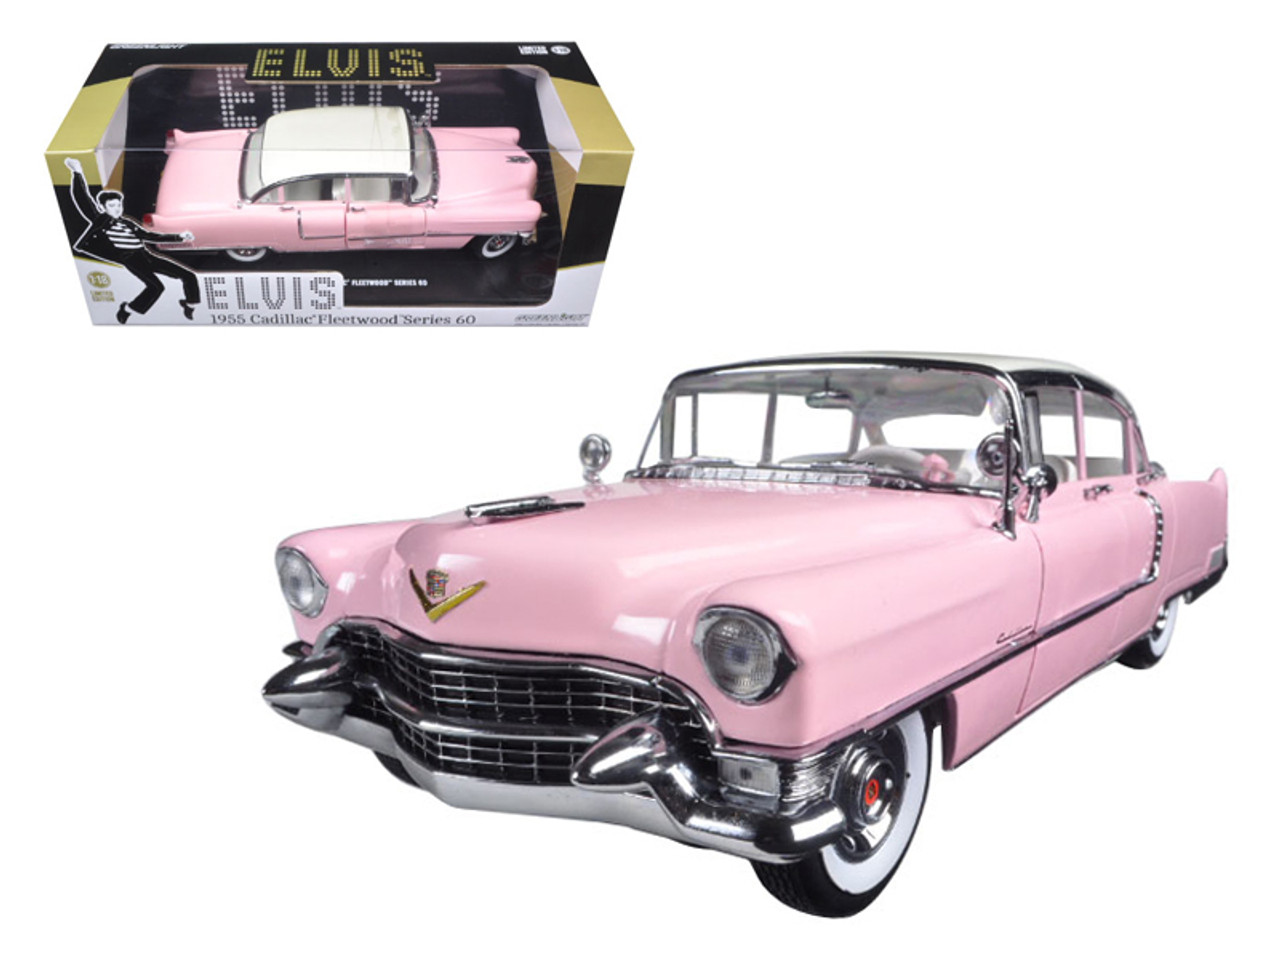 1/18 Greenlight 1955 Pink Cadillac Fleetwood Series 60 Special "Elvis Presley" Diecast Car Model